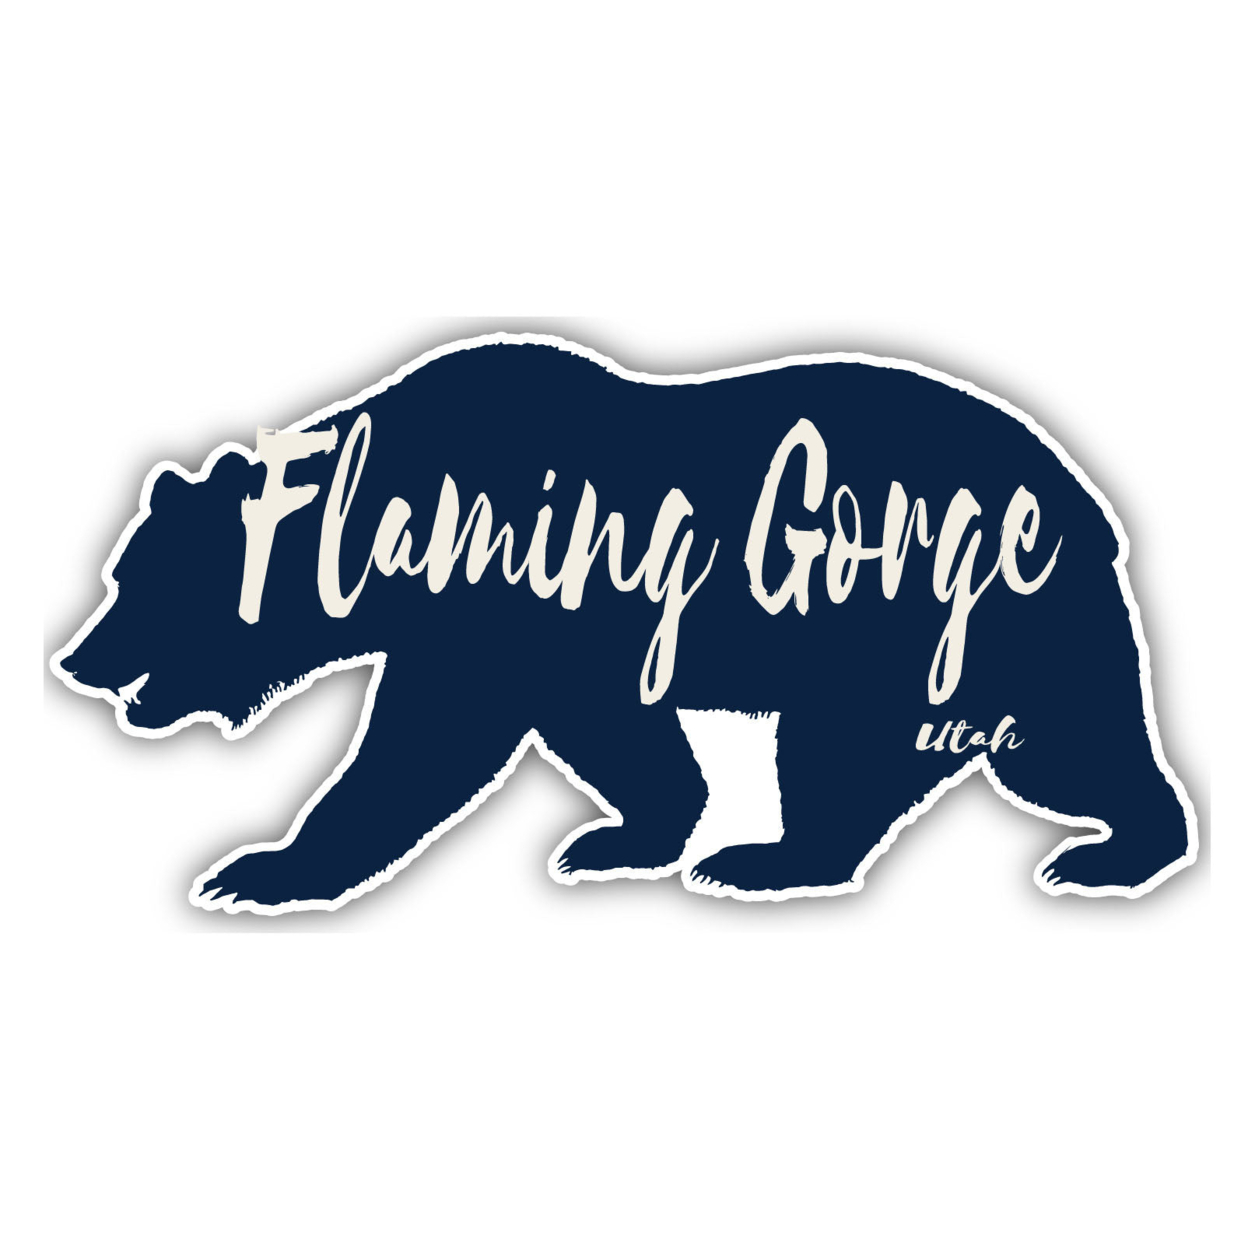 Flaming Gorge Utah Souvenir Decorative Stickers (Choose Theme And Size) - Single Unit, 10-Inch, Bear